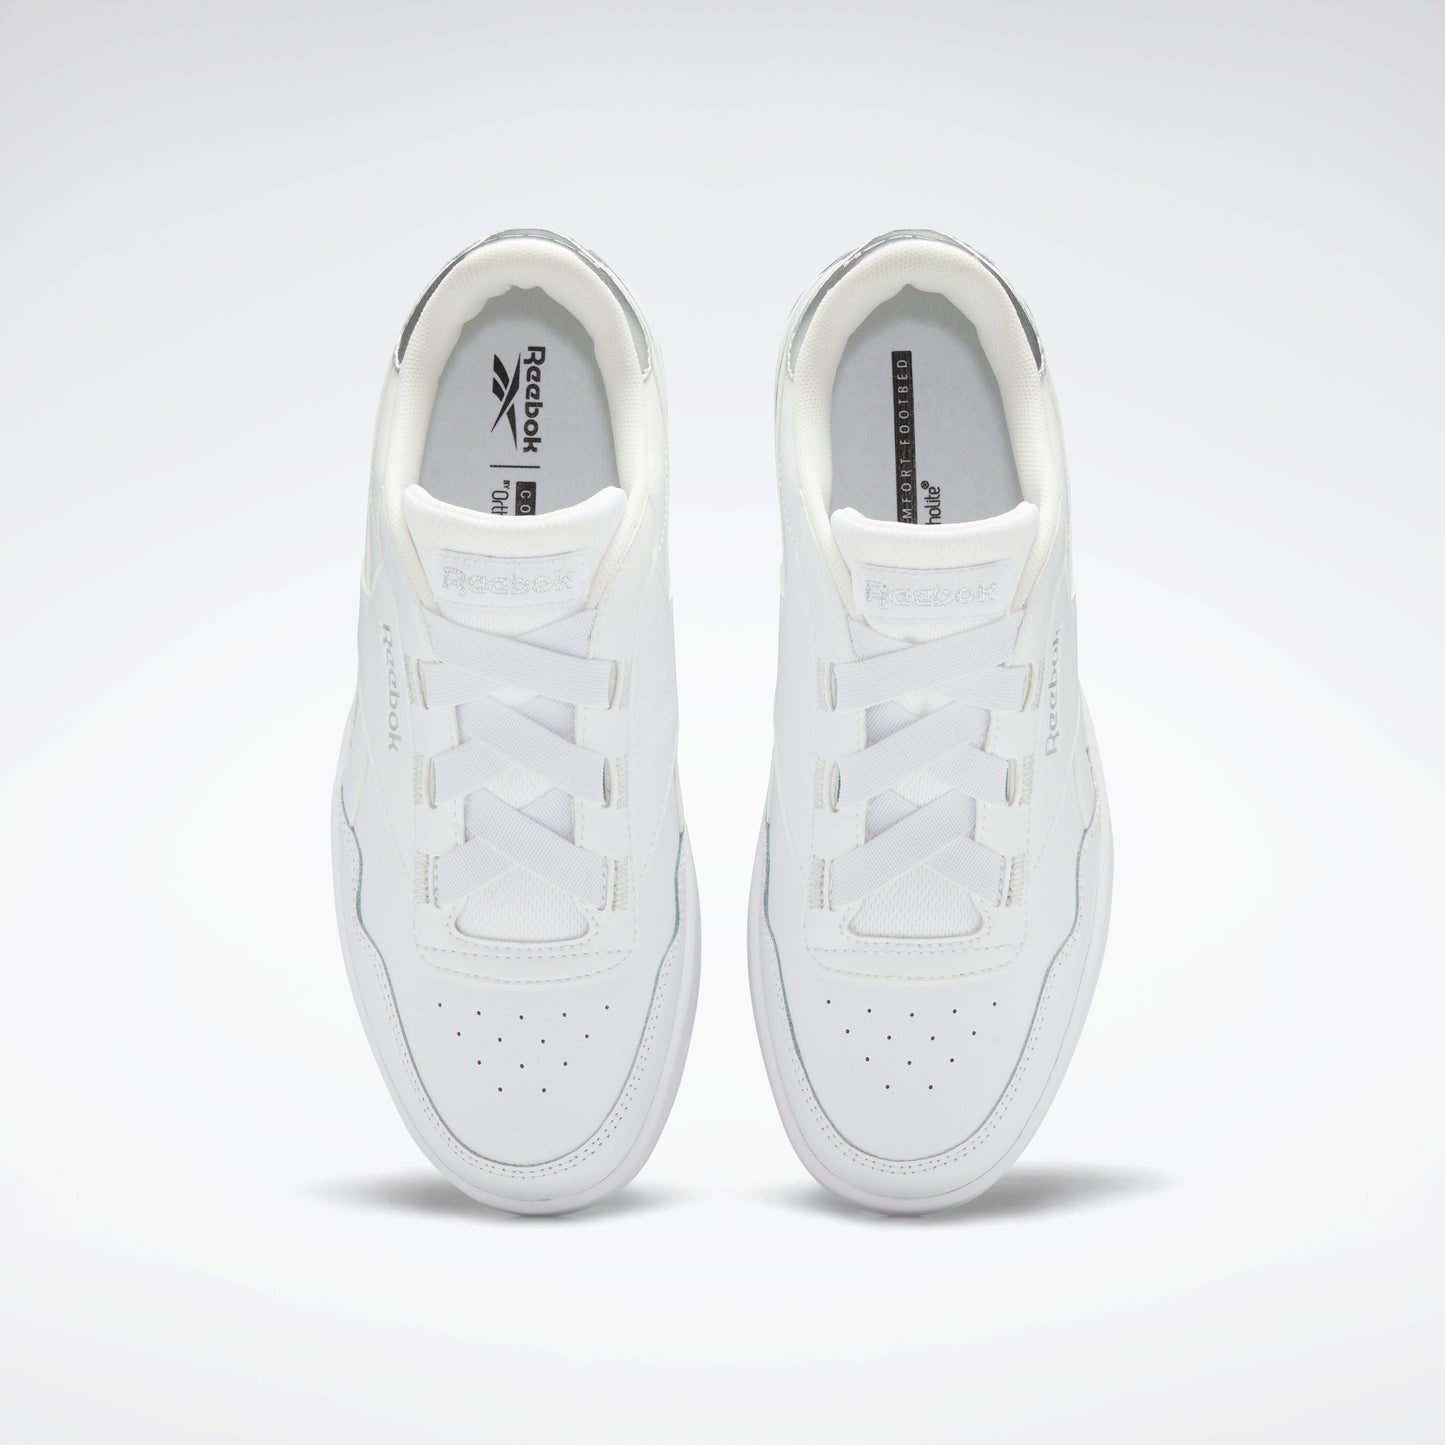 Chaussures Reebok Footwear Femmes Reebok Royal Techque T Elastic Chaussures Blanc/Métal Argenté/Blanc